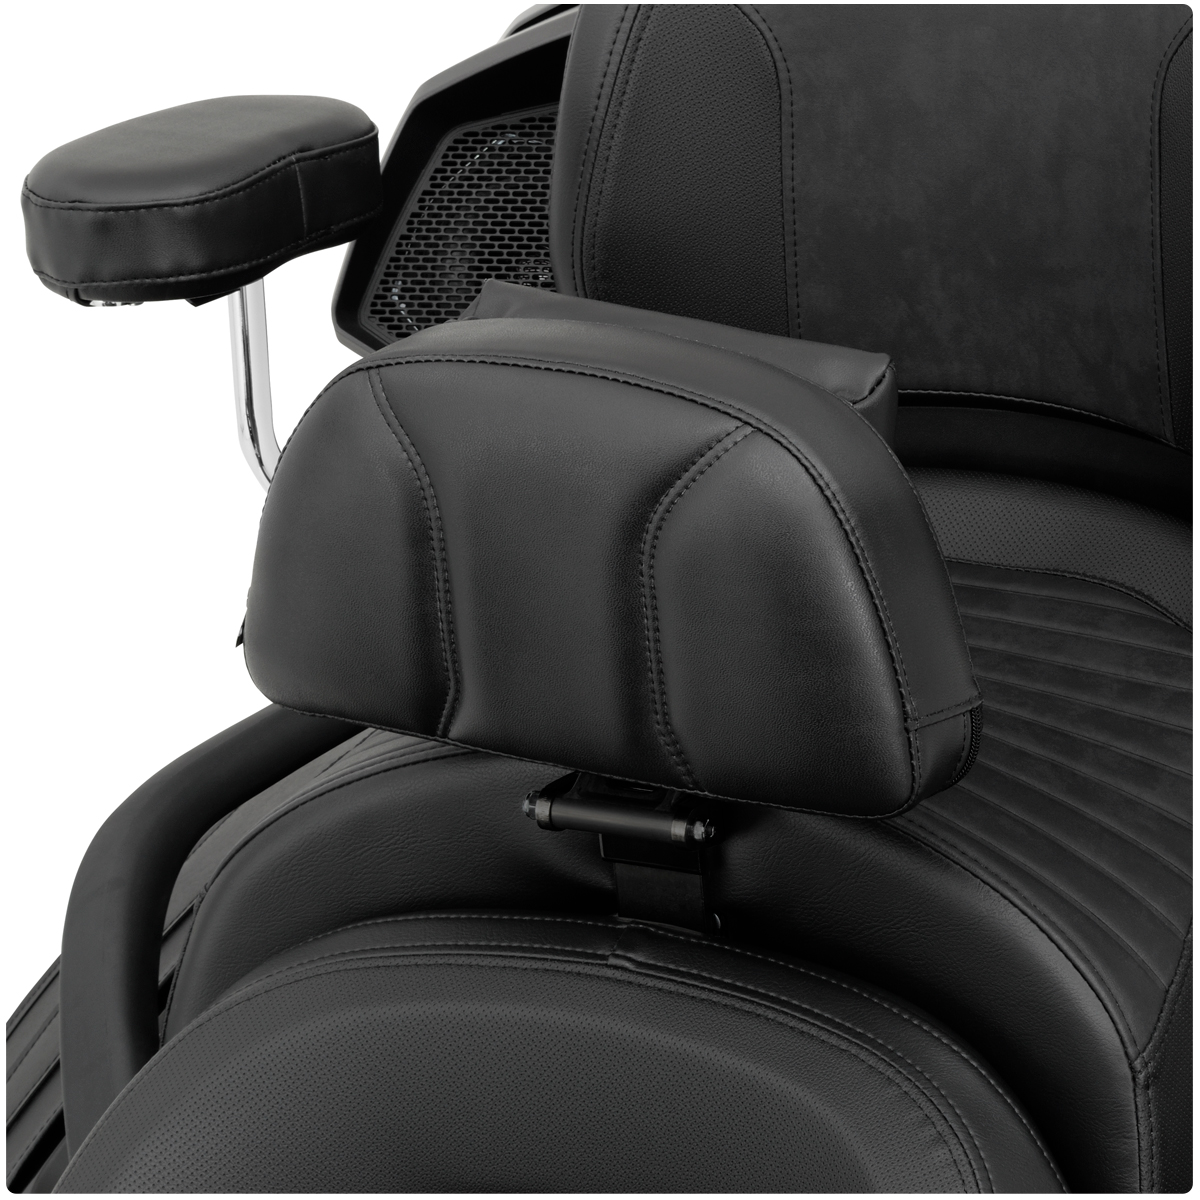 Can-Am Spyder F3 Adjustable Quick Detach Driver Backrest